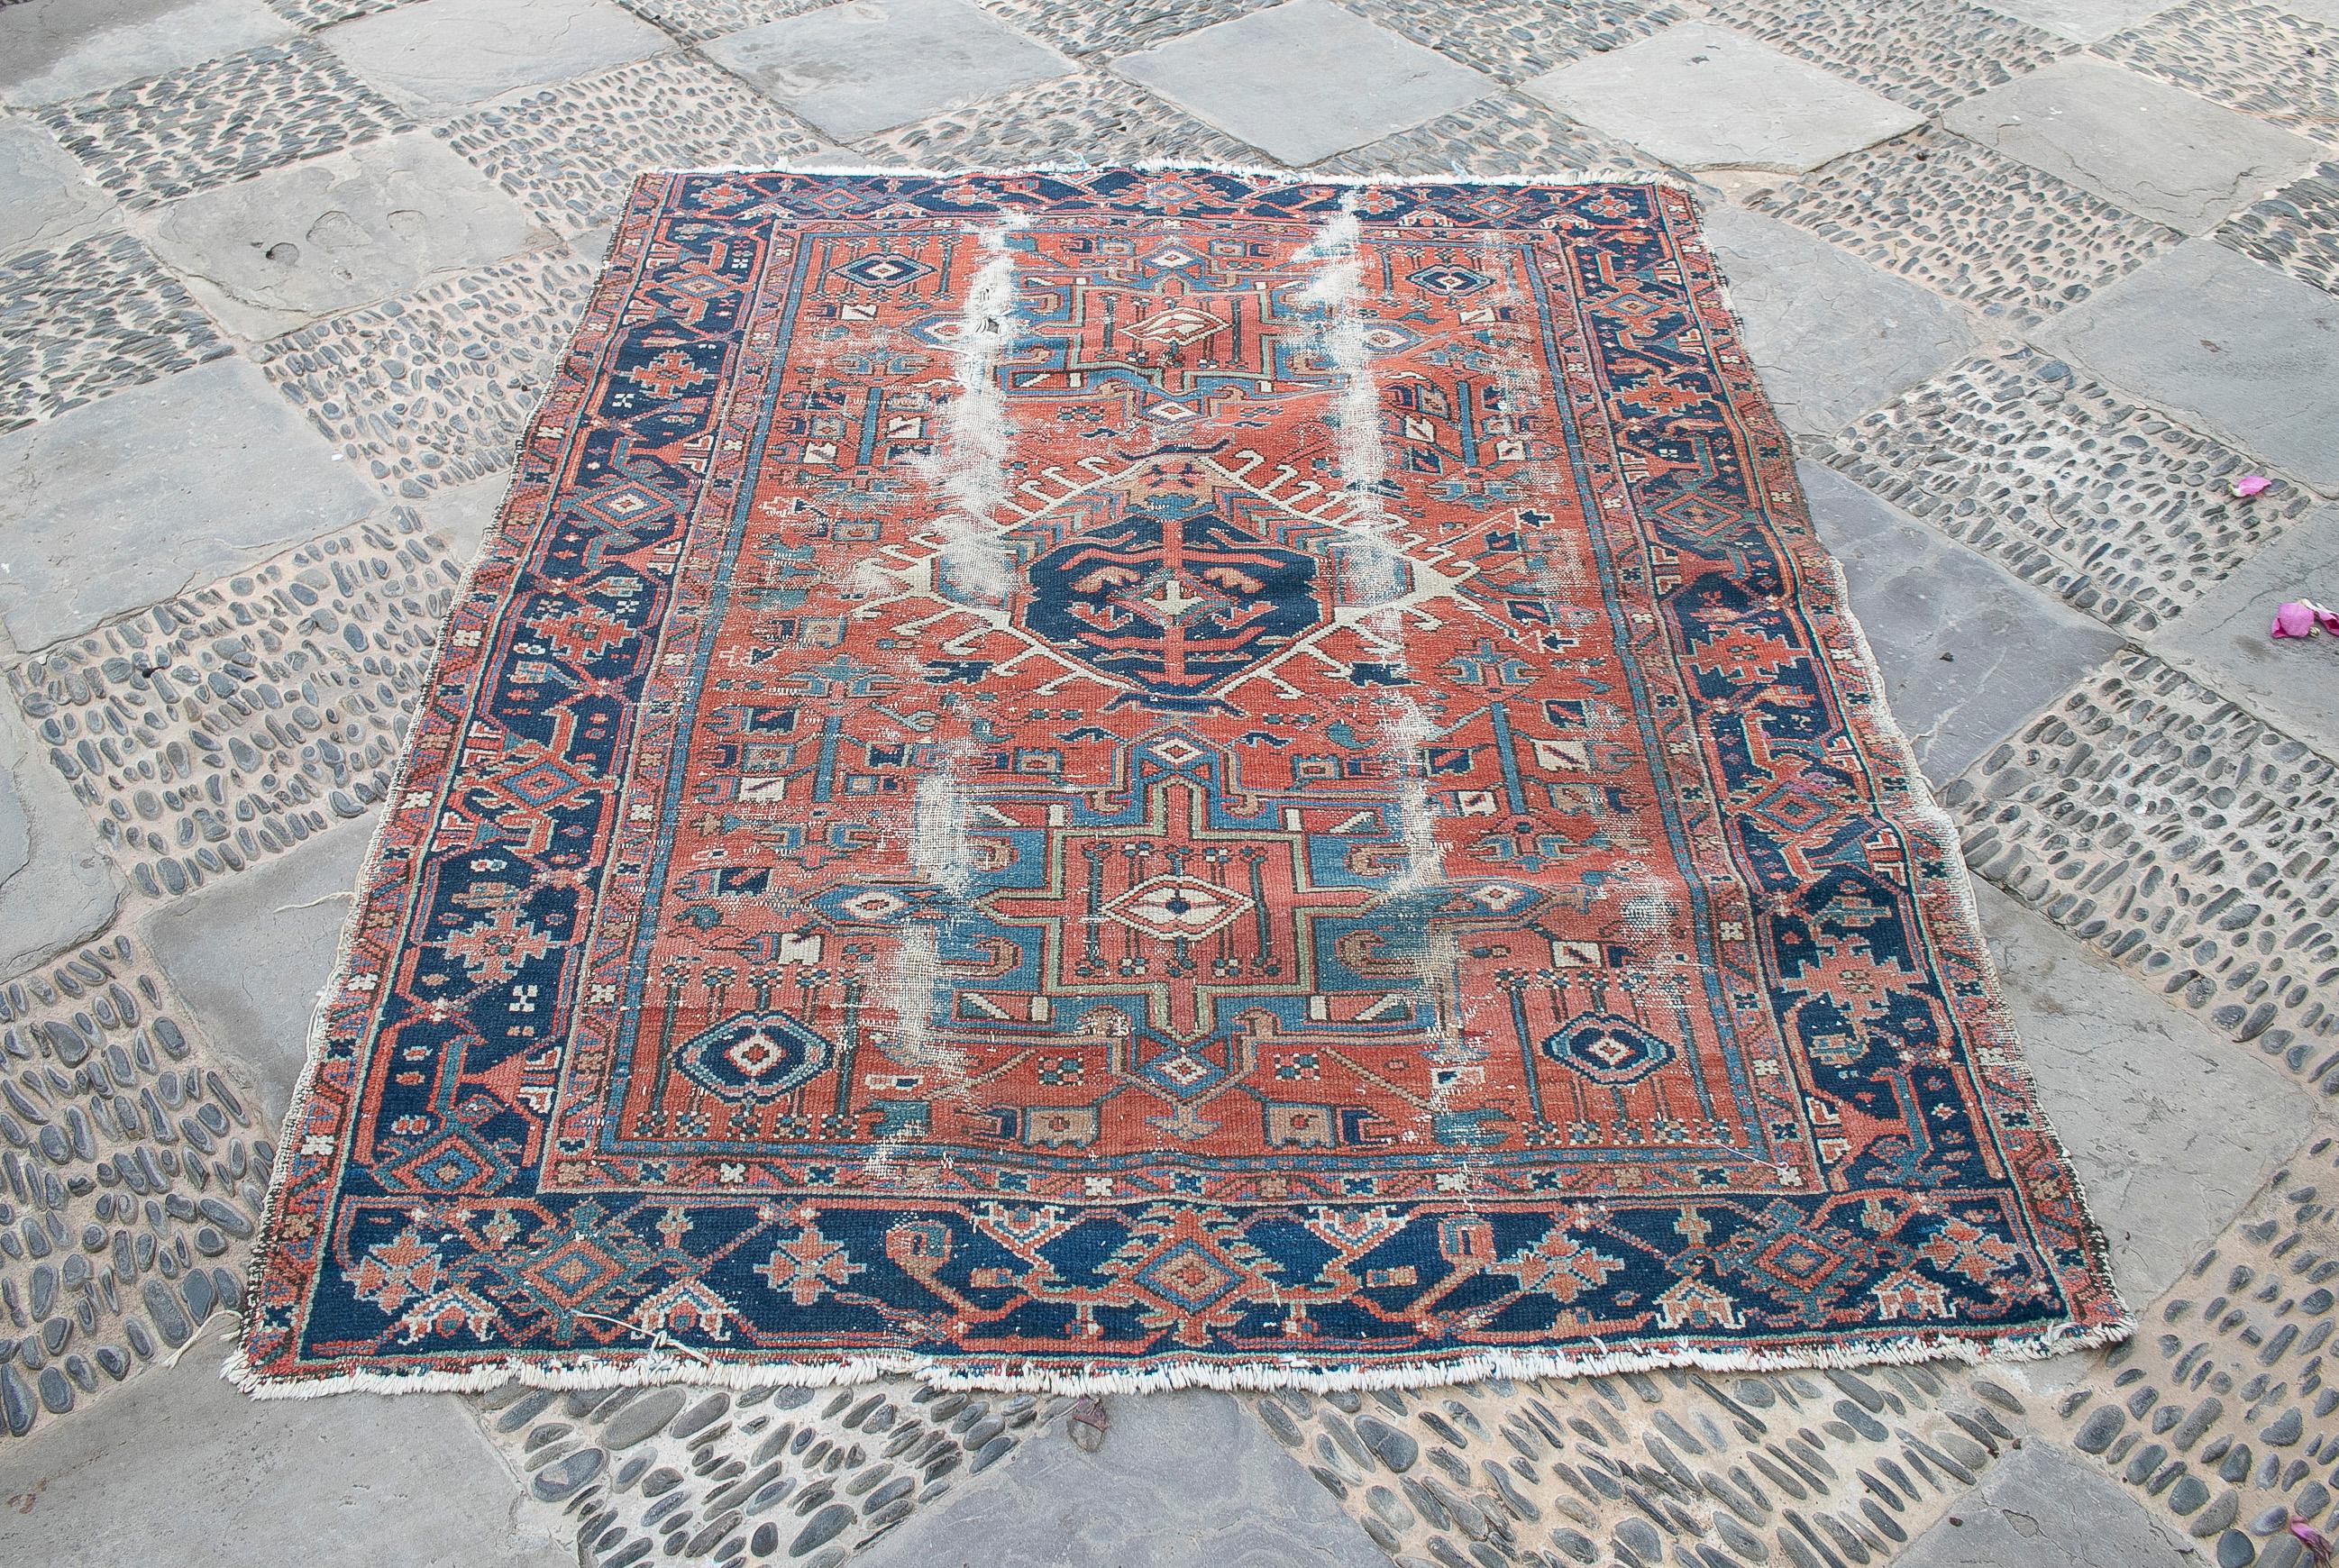 Antique 18th century Turkish kilim wool carpet rug.